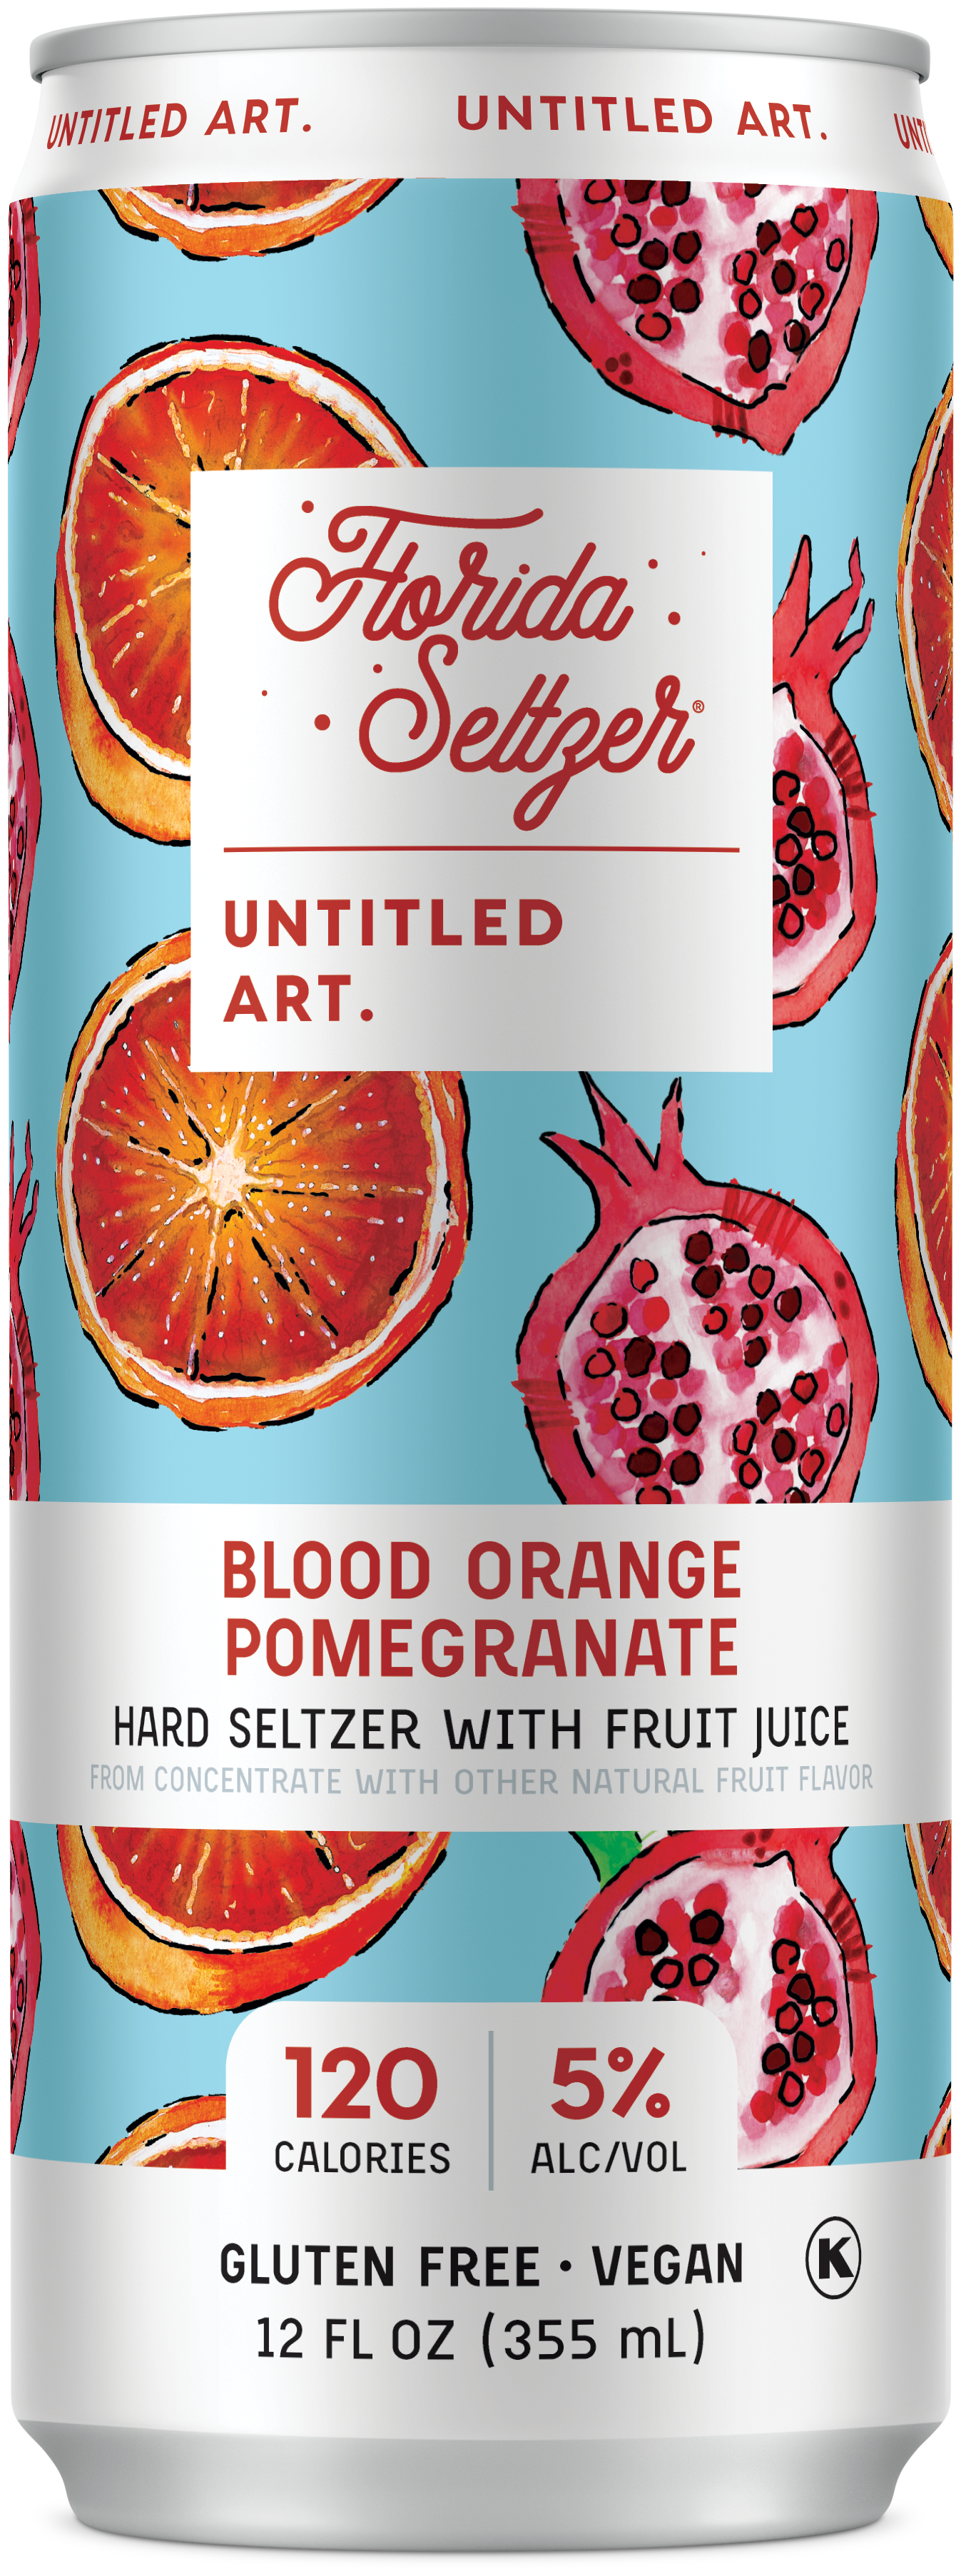 A can of blood orange pomegranate juice.